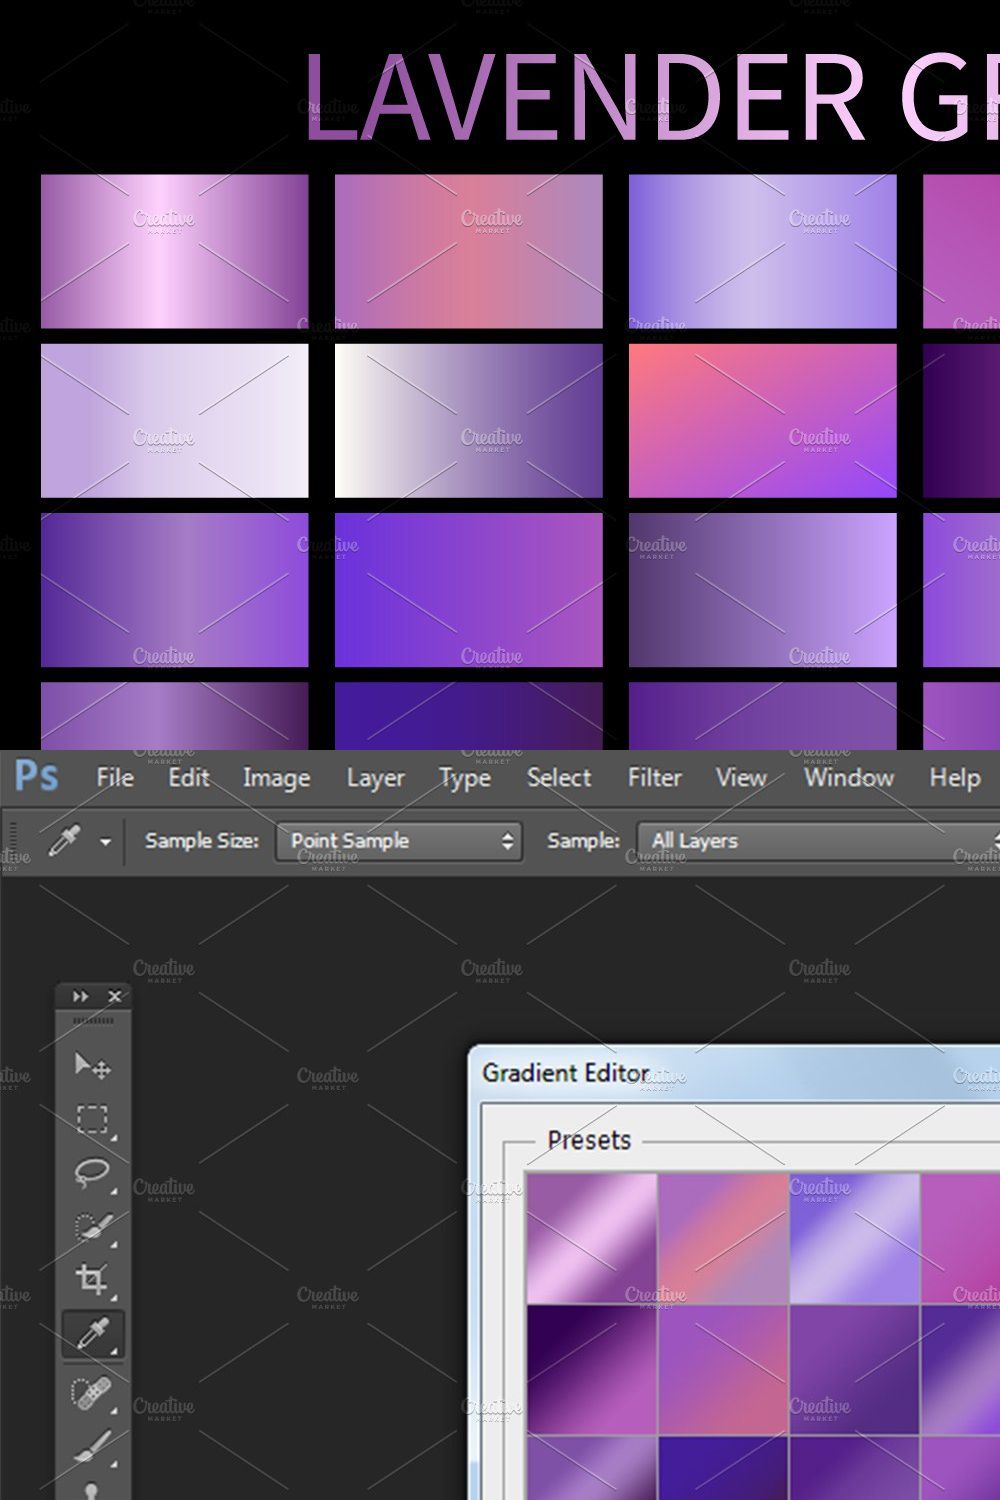 Lavender Gradients GRD. AI. Vector pinterest preview image.